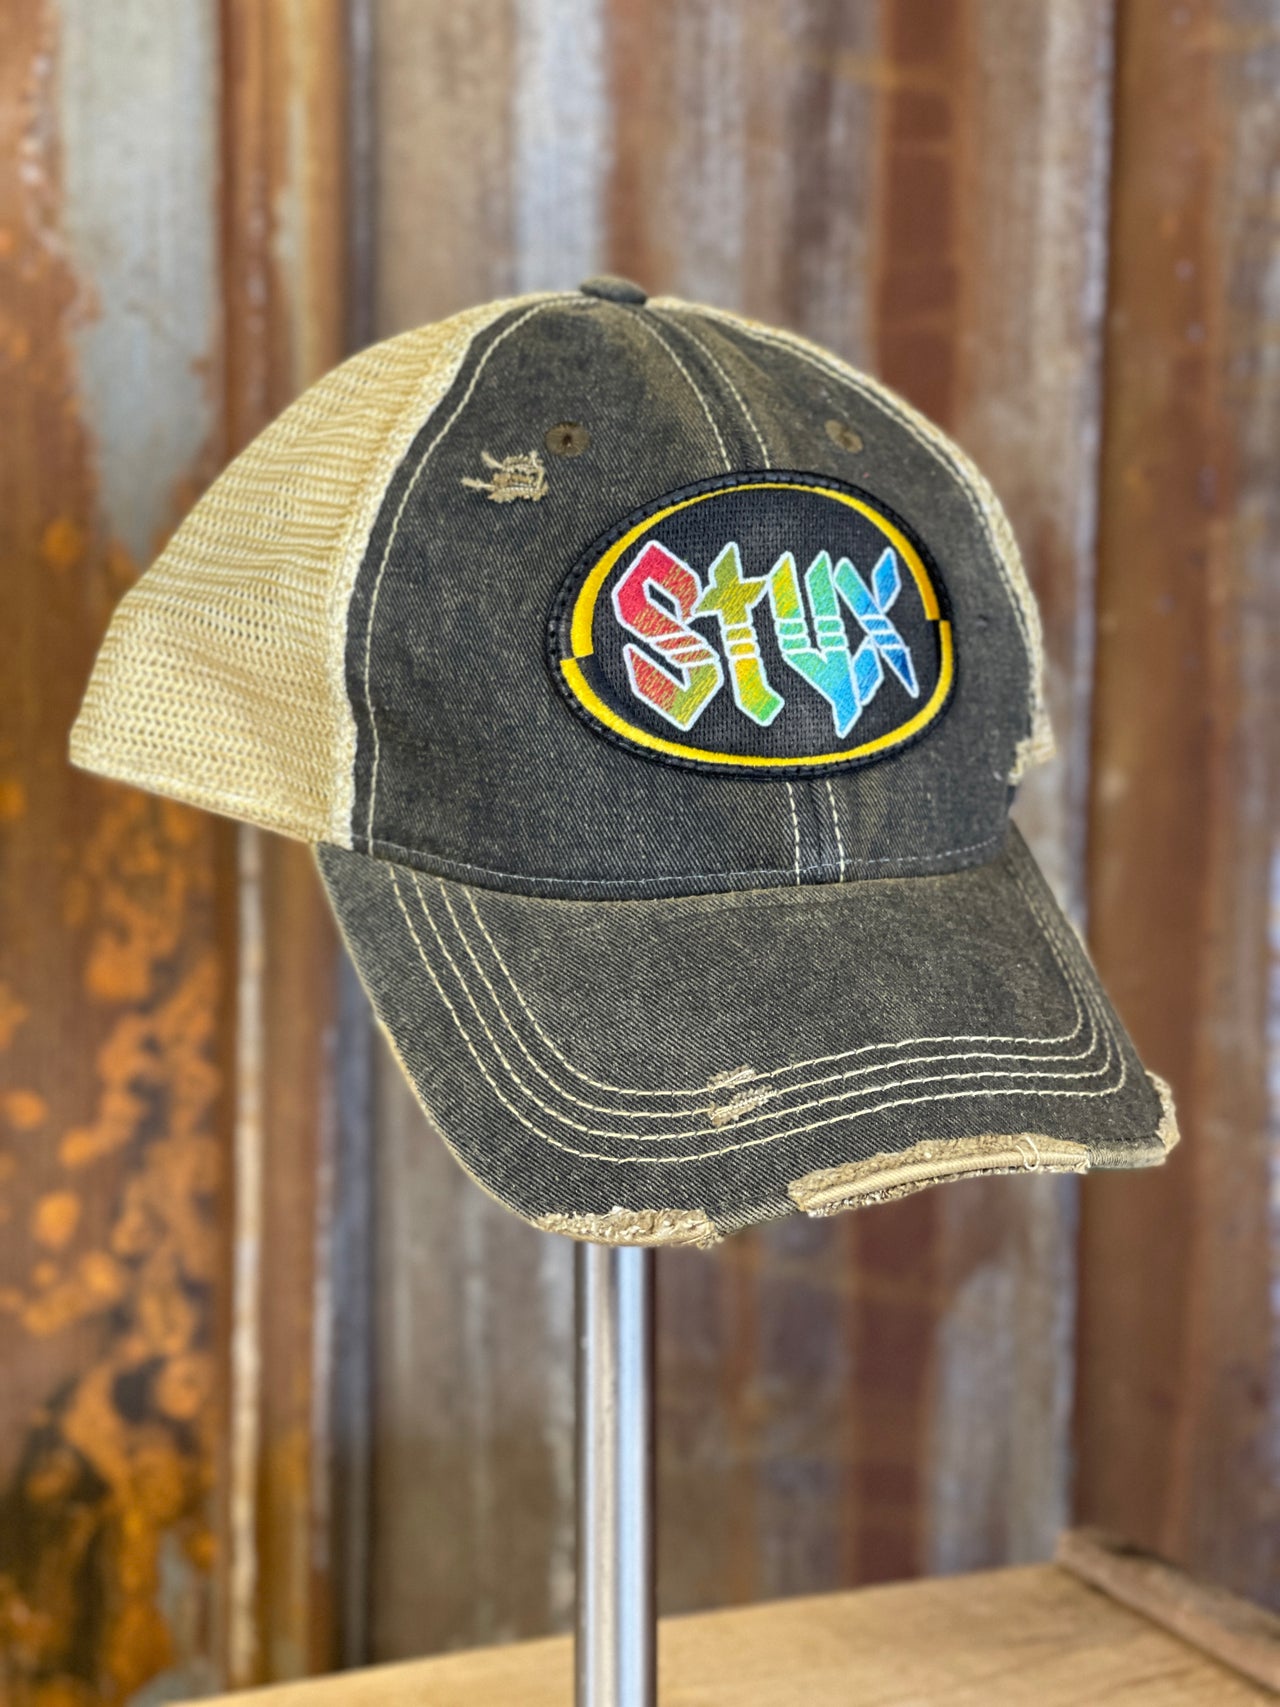 Styx Mulit-color hat